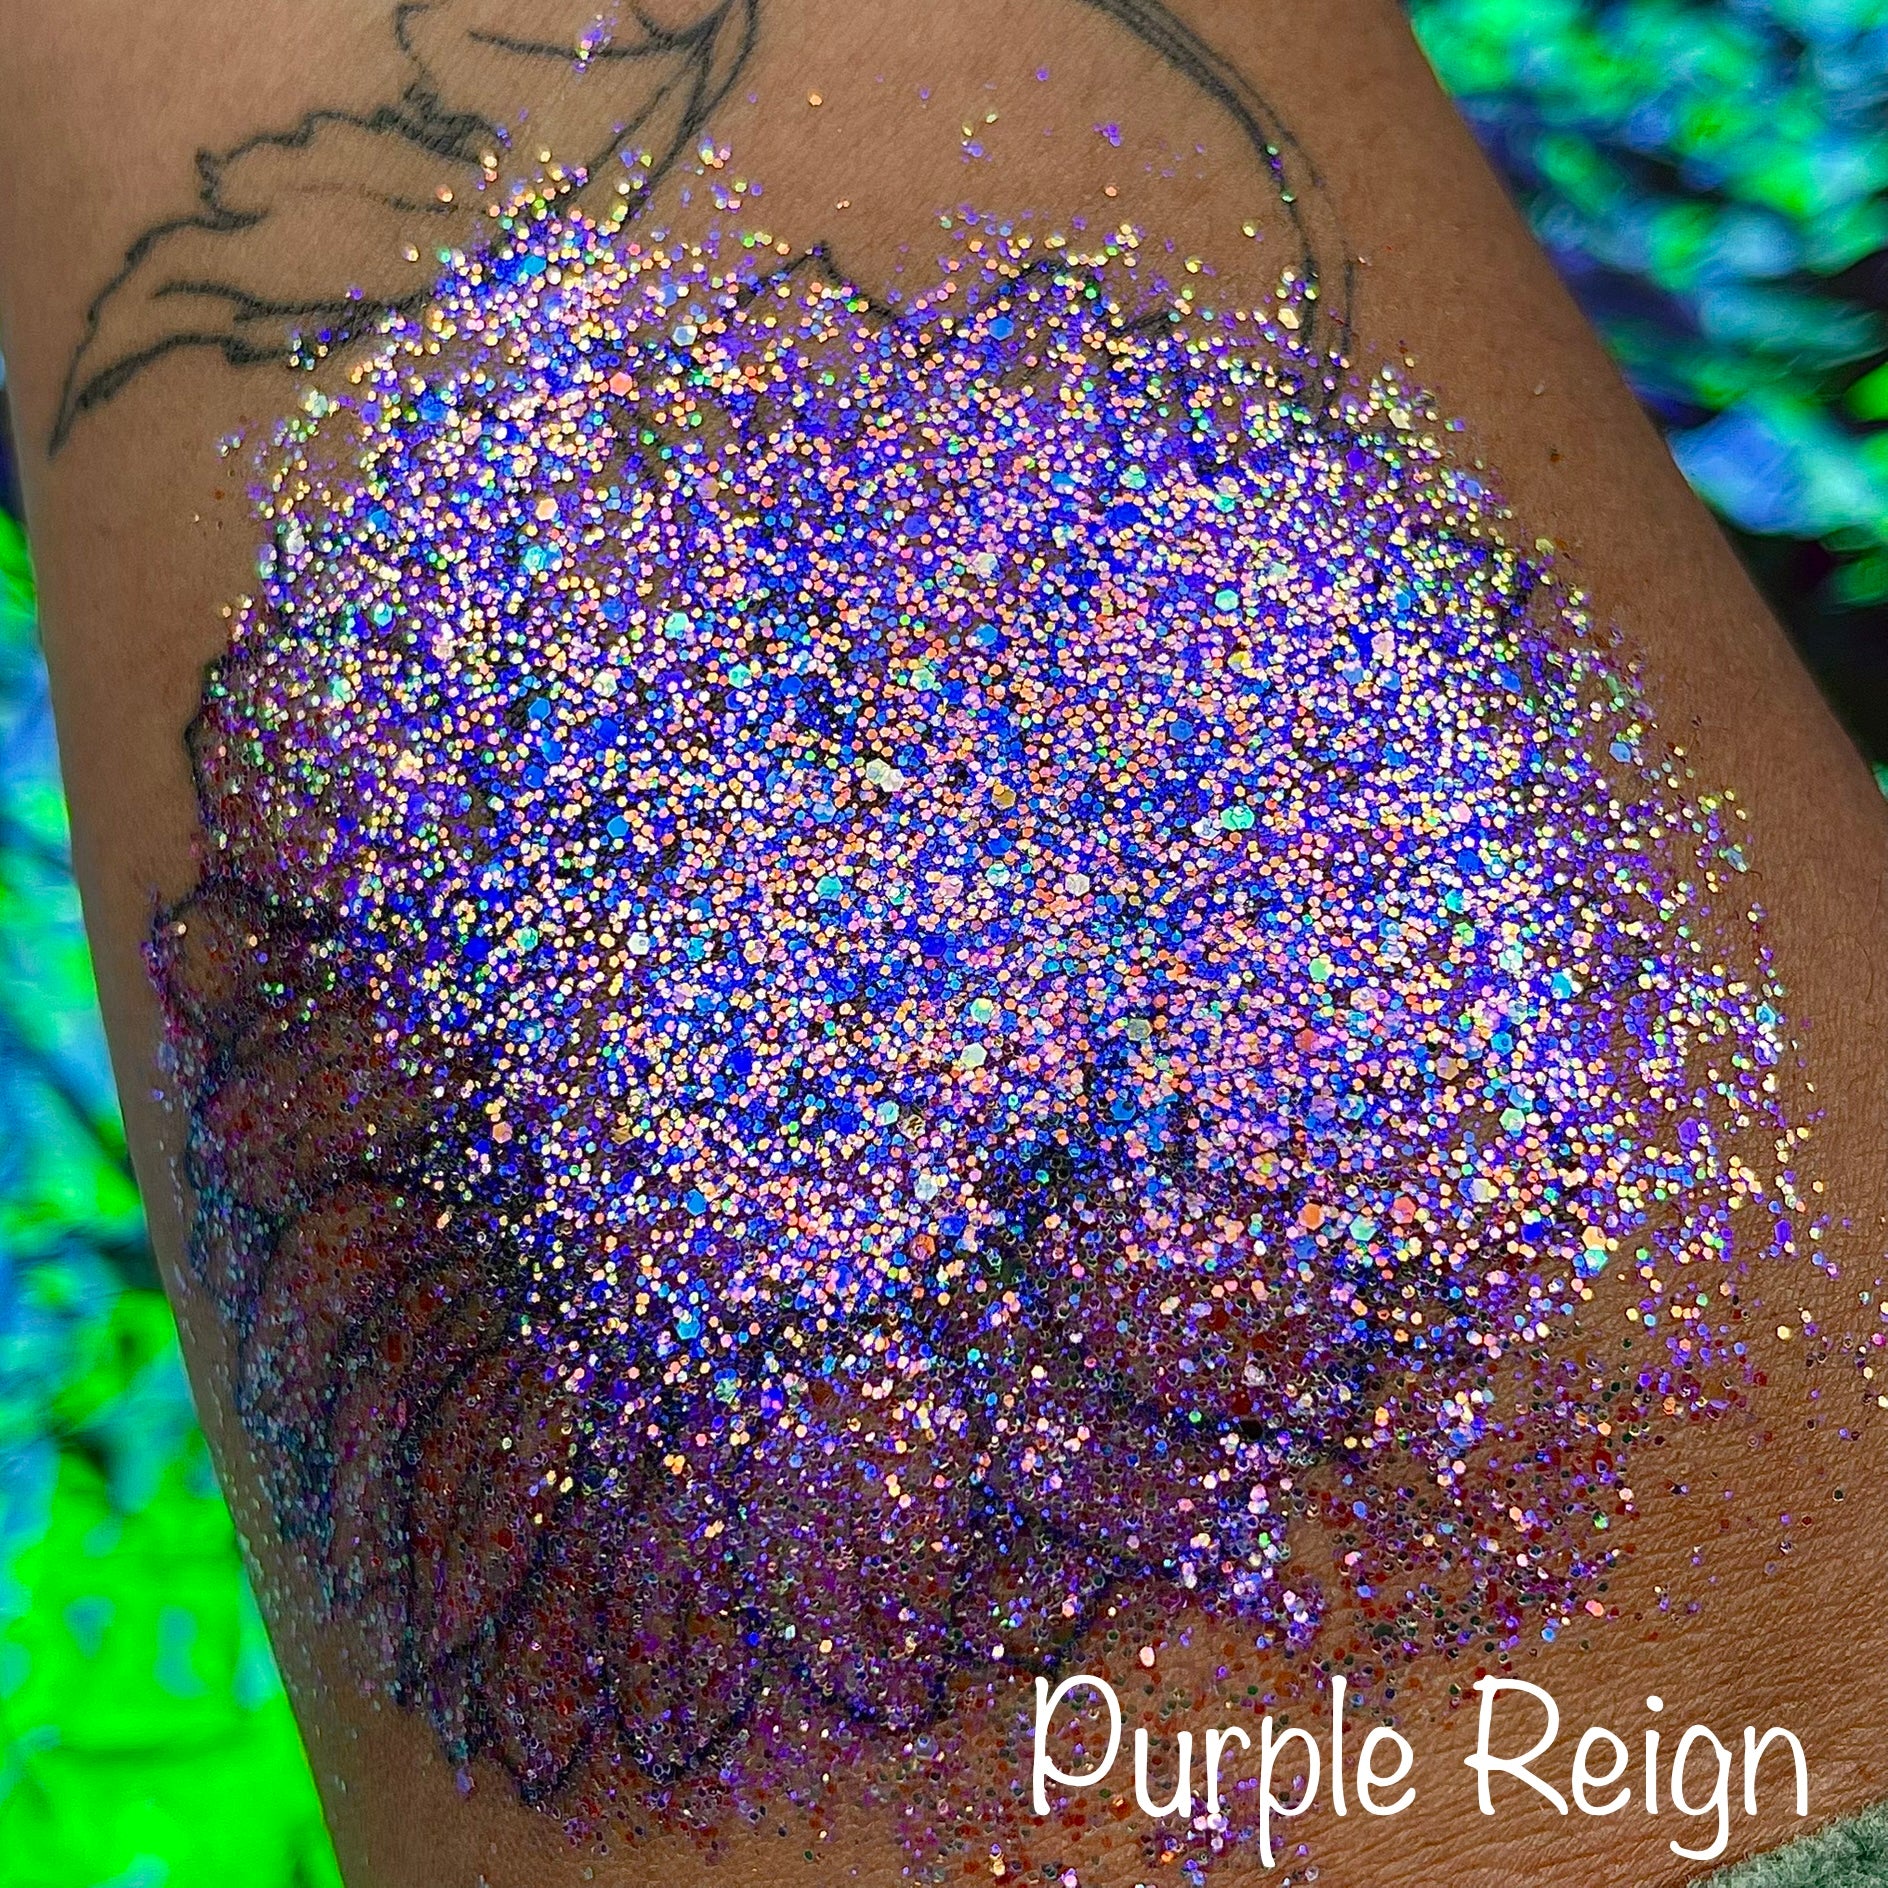 Purple Reign Glitter Gel (@eg0friendly)